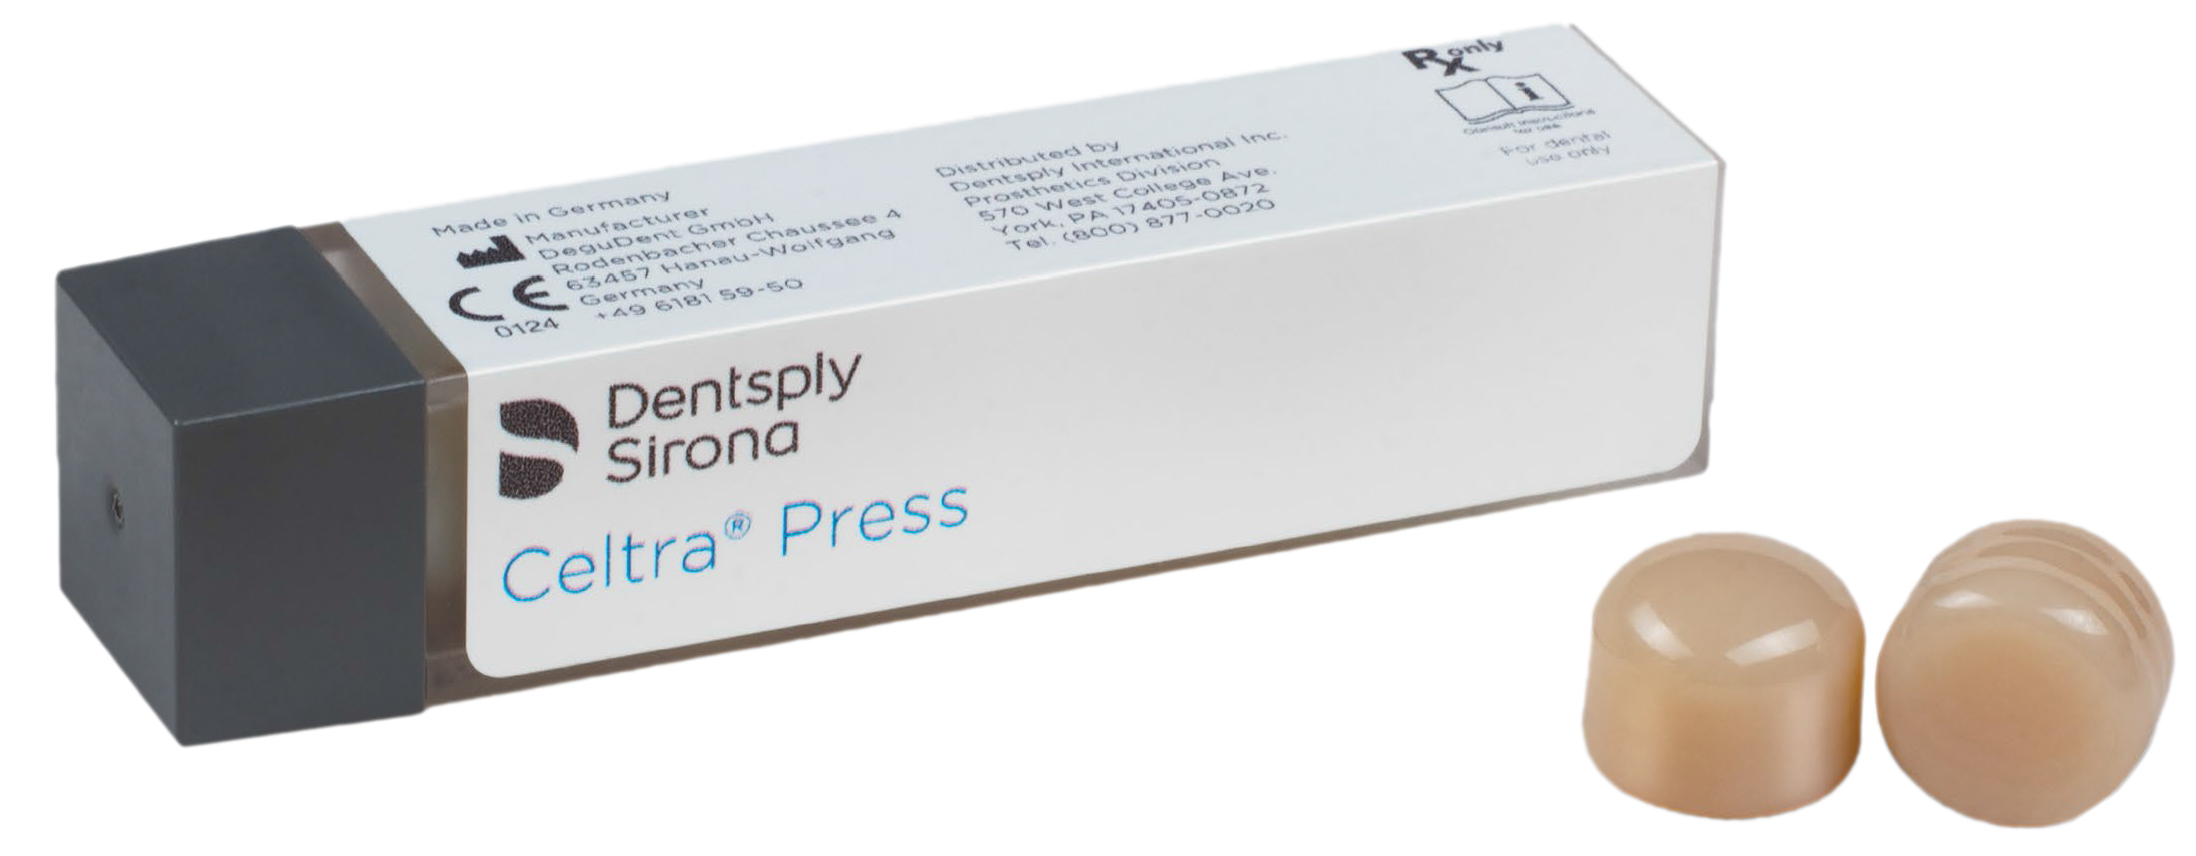 Заготовки Celtra Press MT/LT низкая прозрачность BL2 (5х3 г) Dentsply Sirona